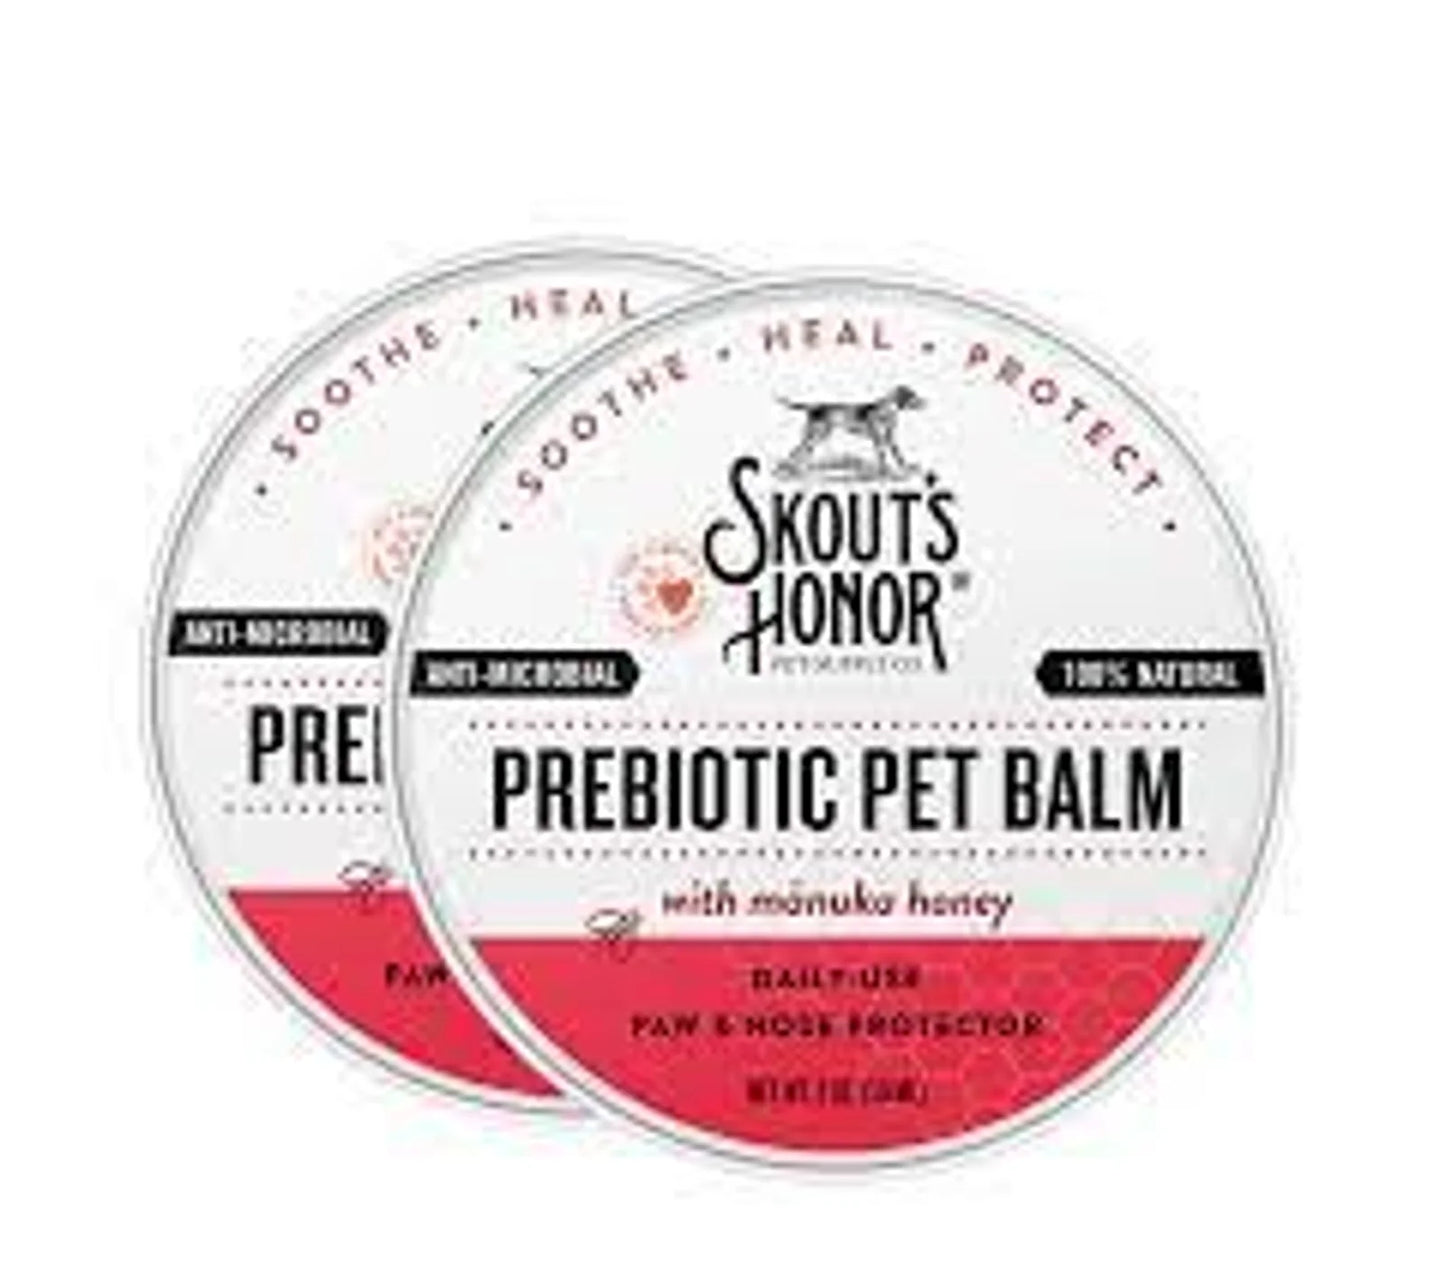 Probiotic pet balm